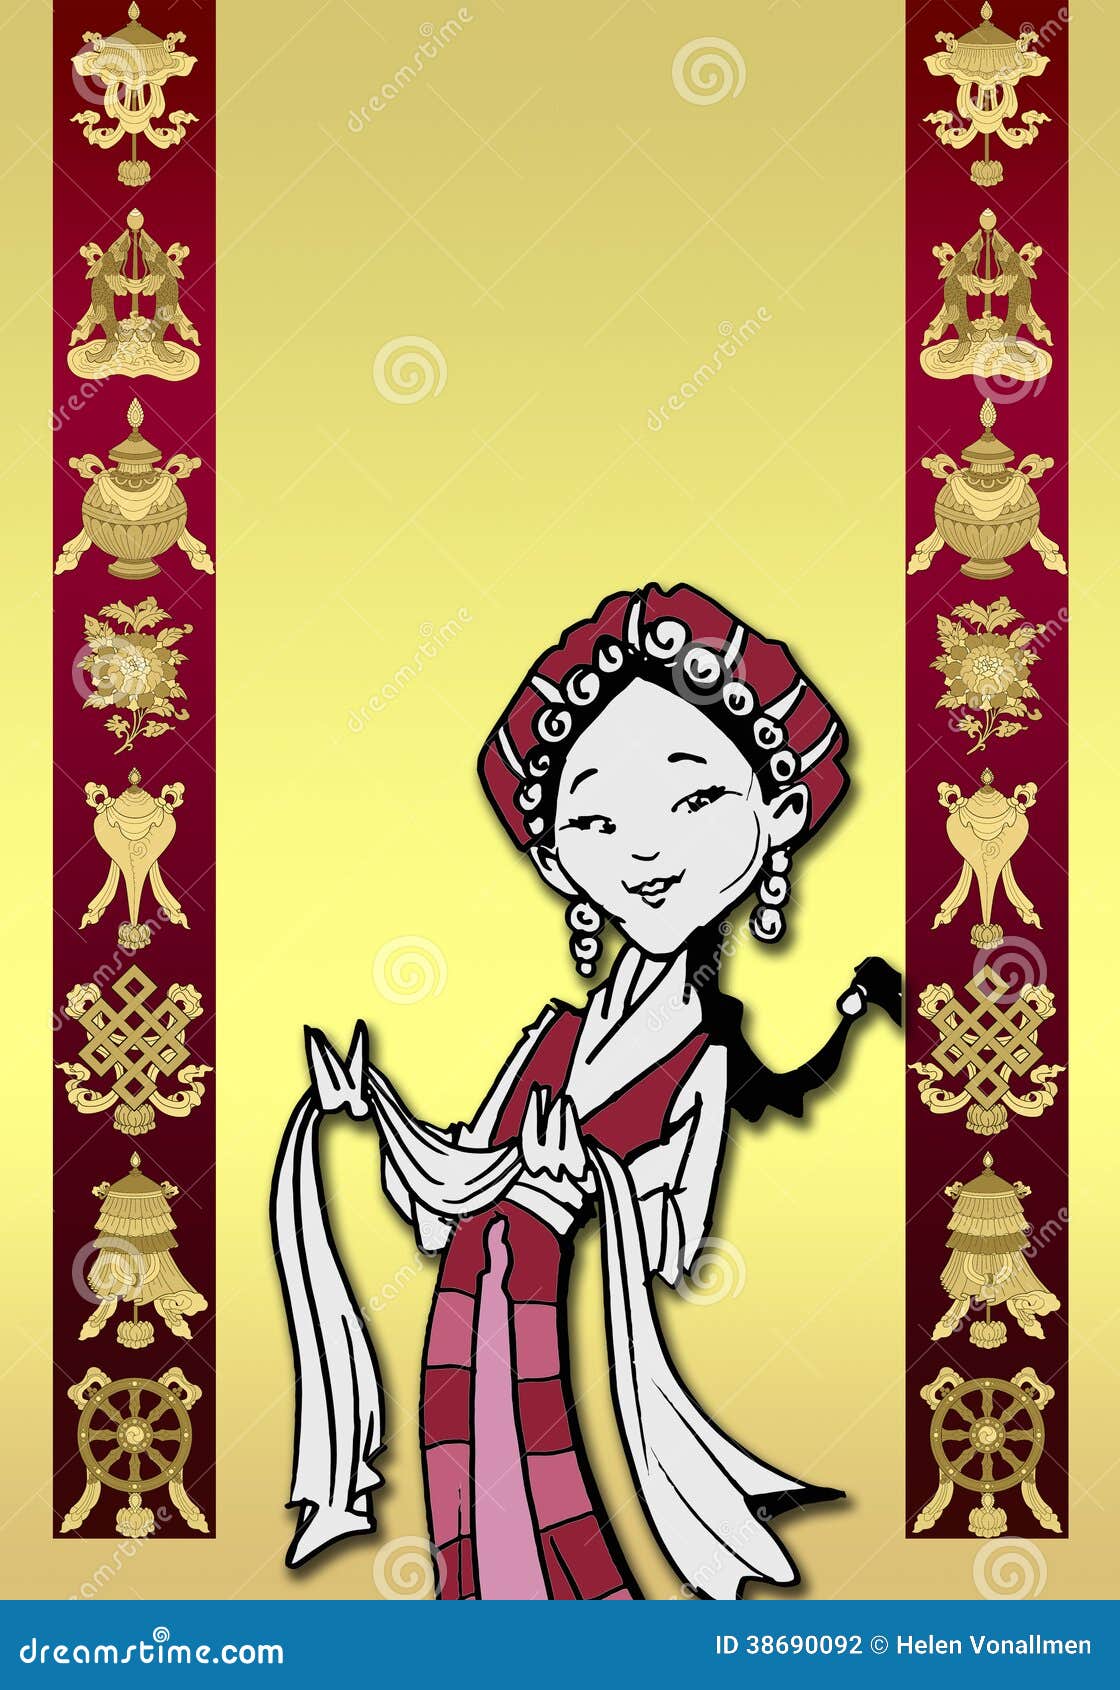 tibetan girl with khata and auspicious s,cartoon